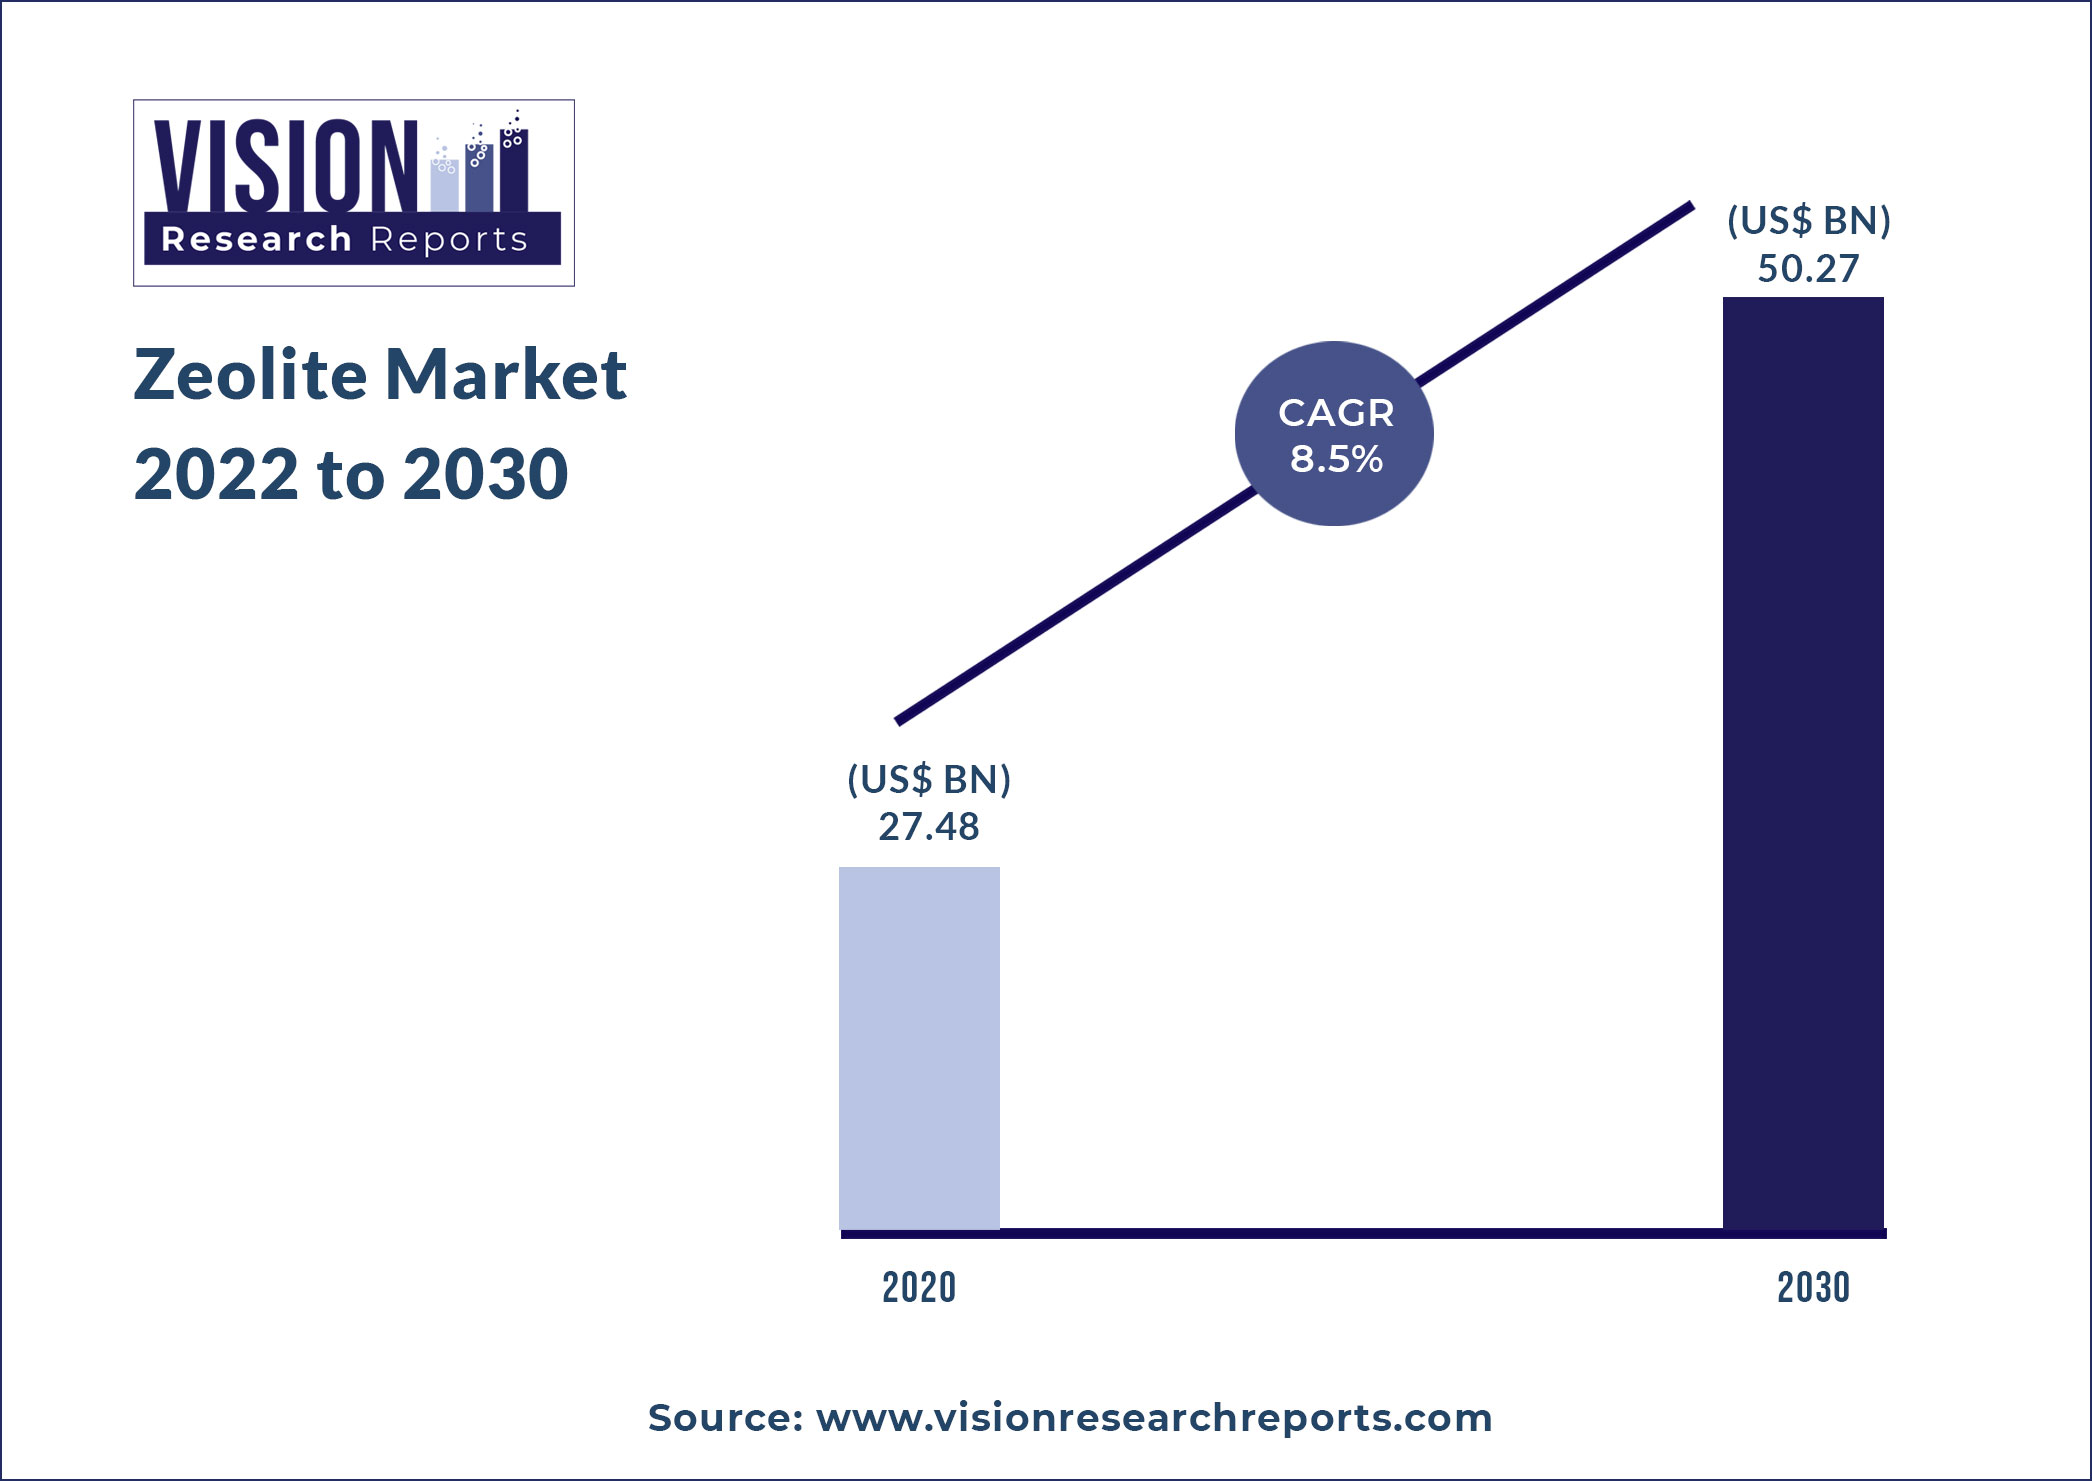 Zeolite Market Size 2022 to 2030